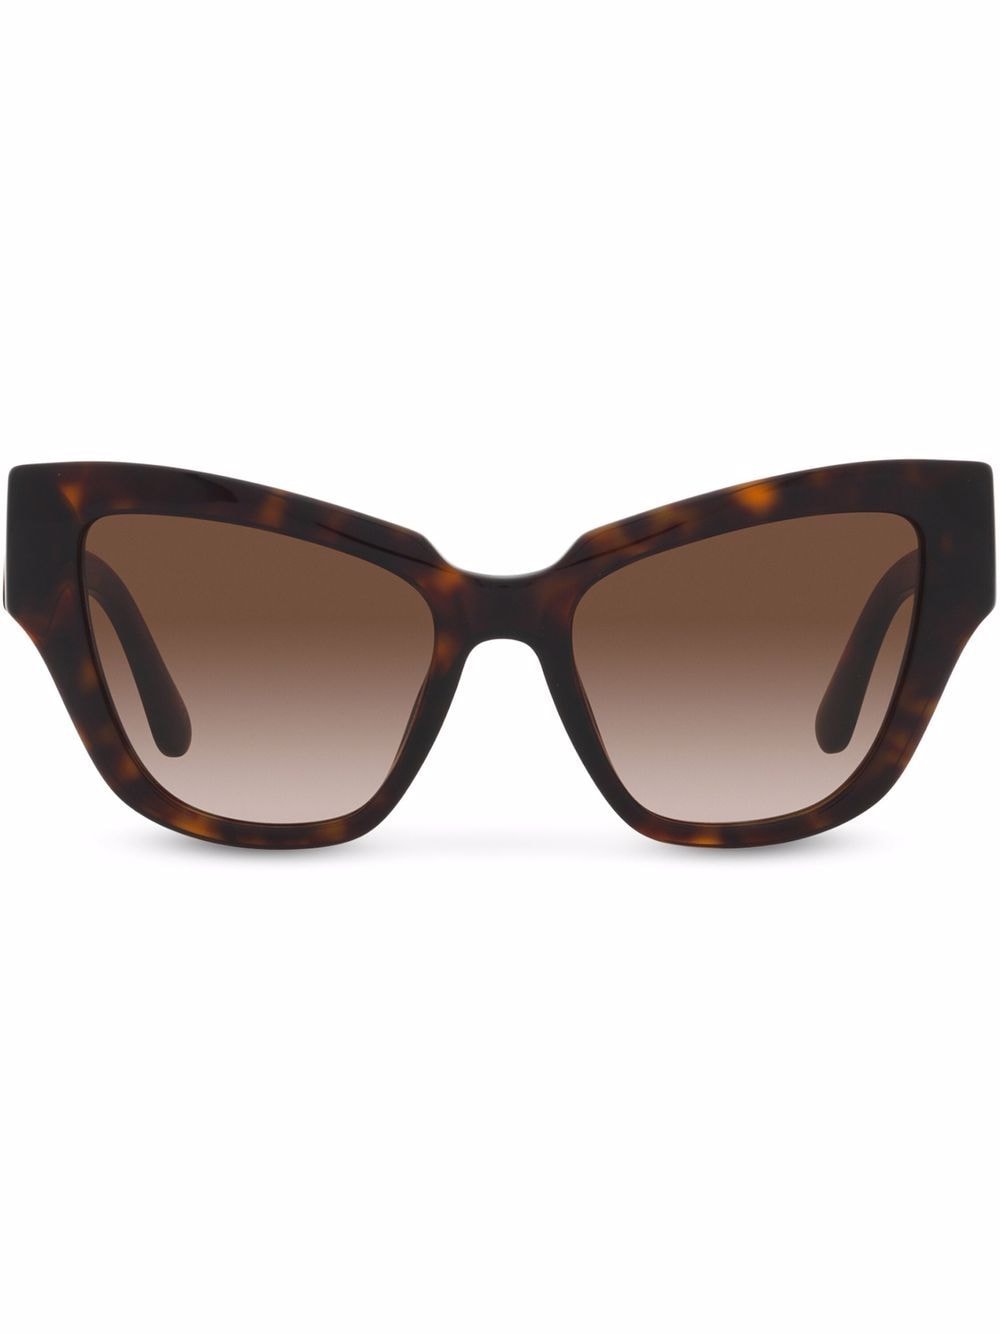 Dolce & Gabbana Eyewear DG crossed sunglasses - Brown von Dolce & Gabbana Eyewear